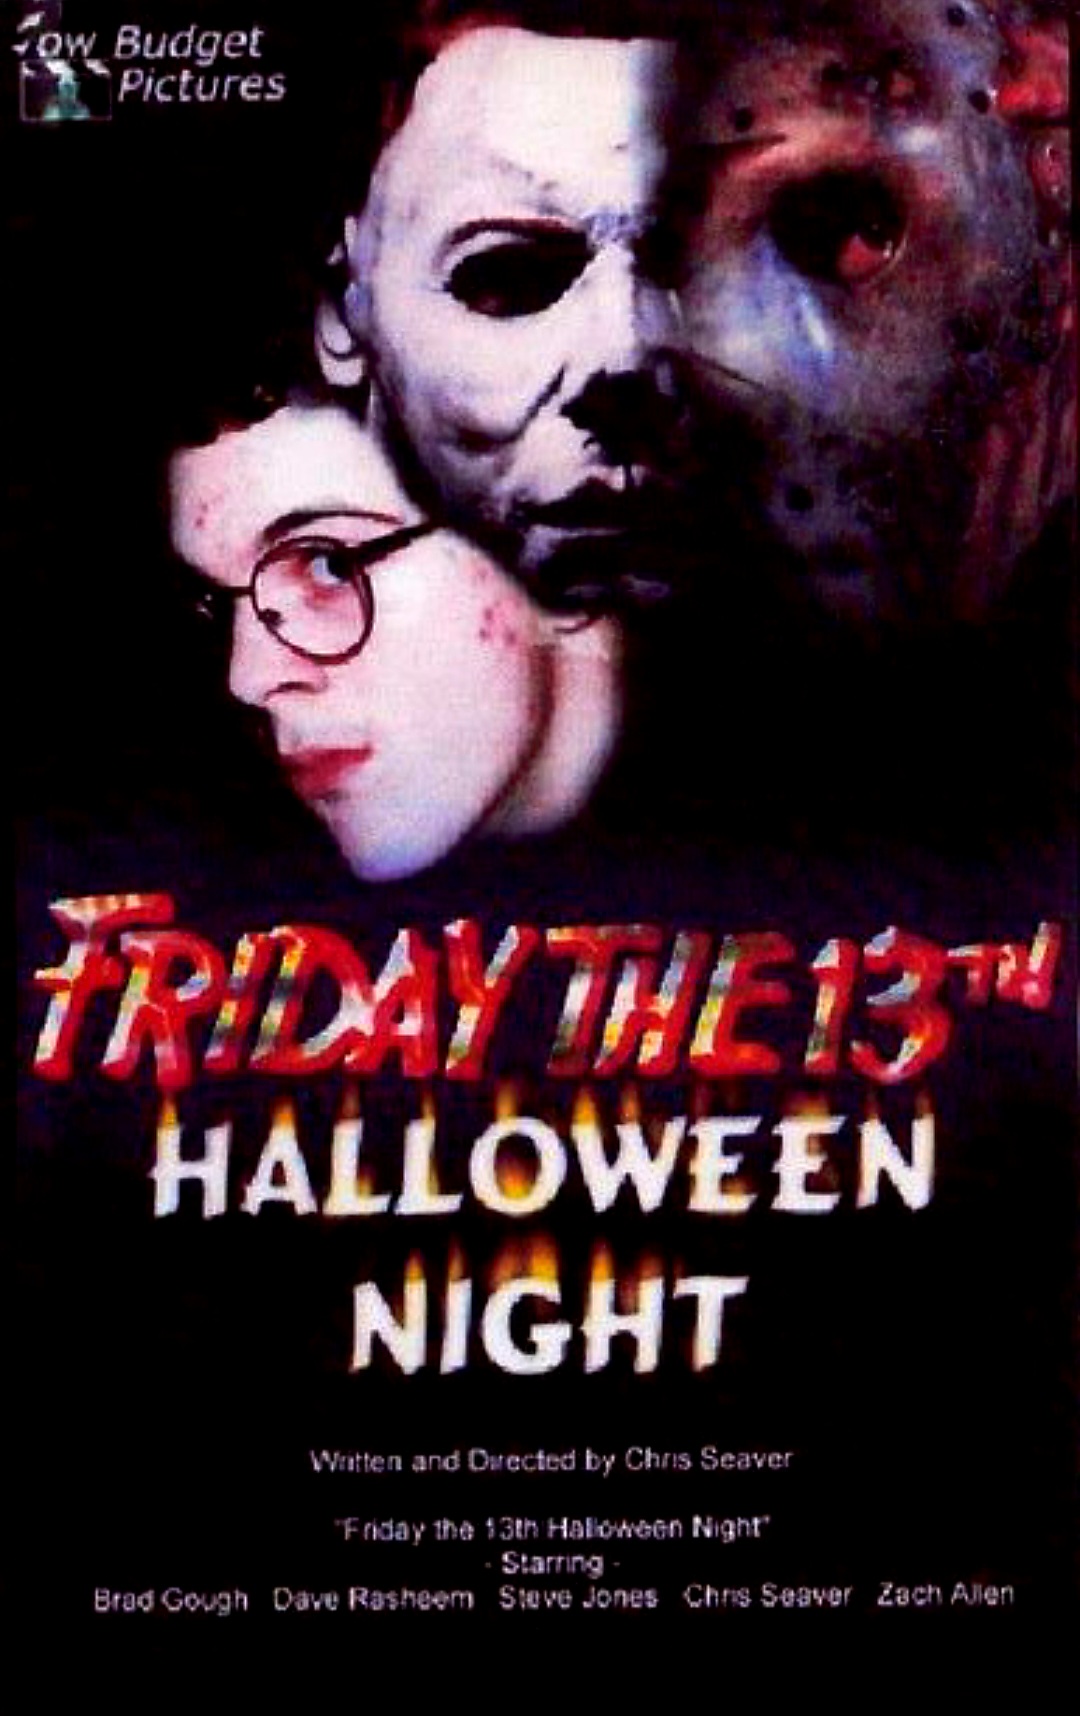 Friday the 13th: Halloween Night (1994) Screenshot 1 